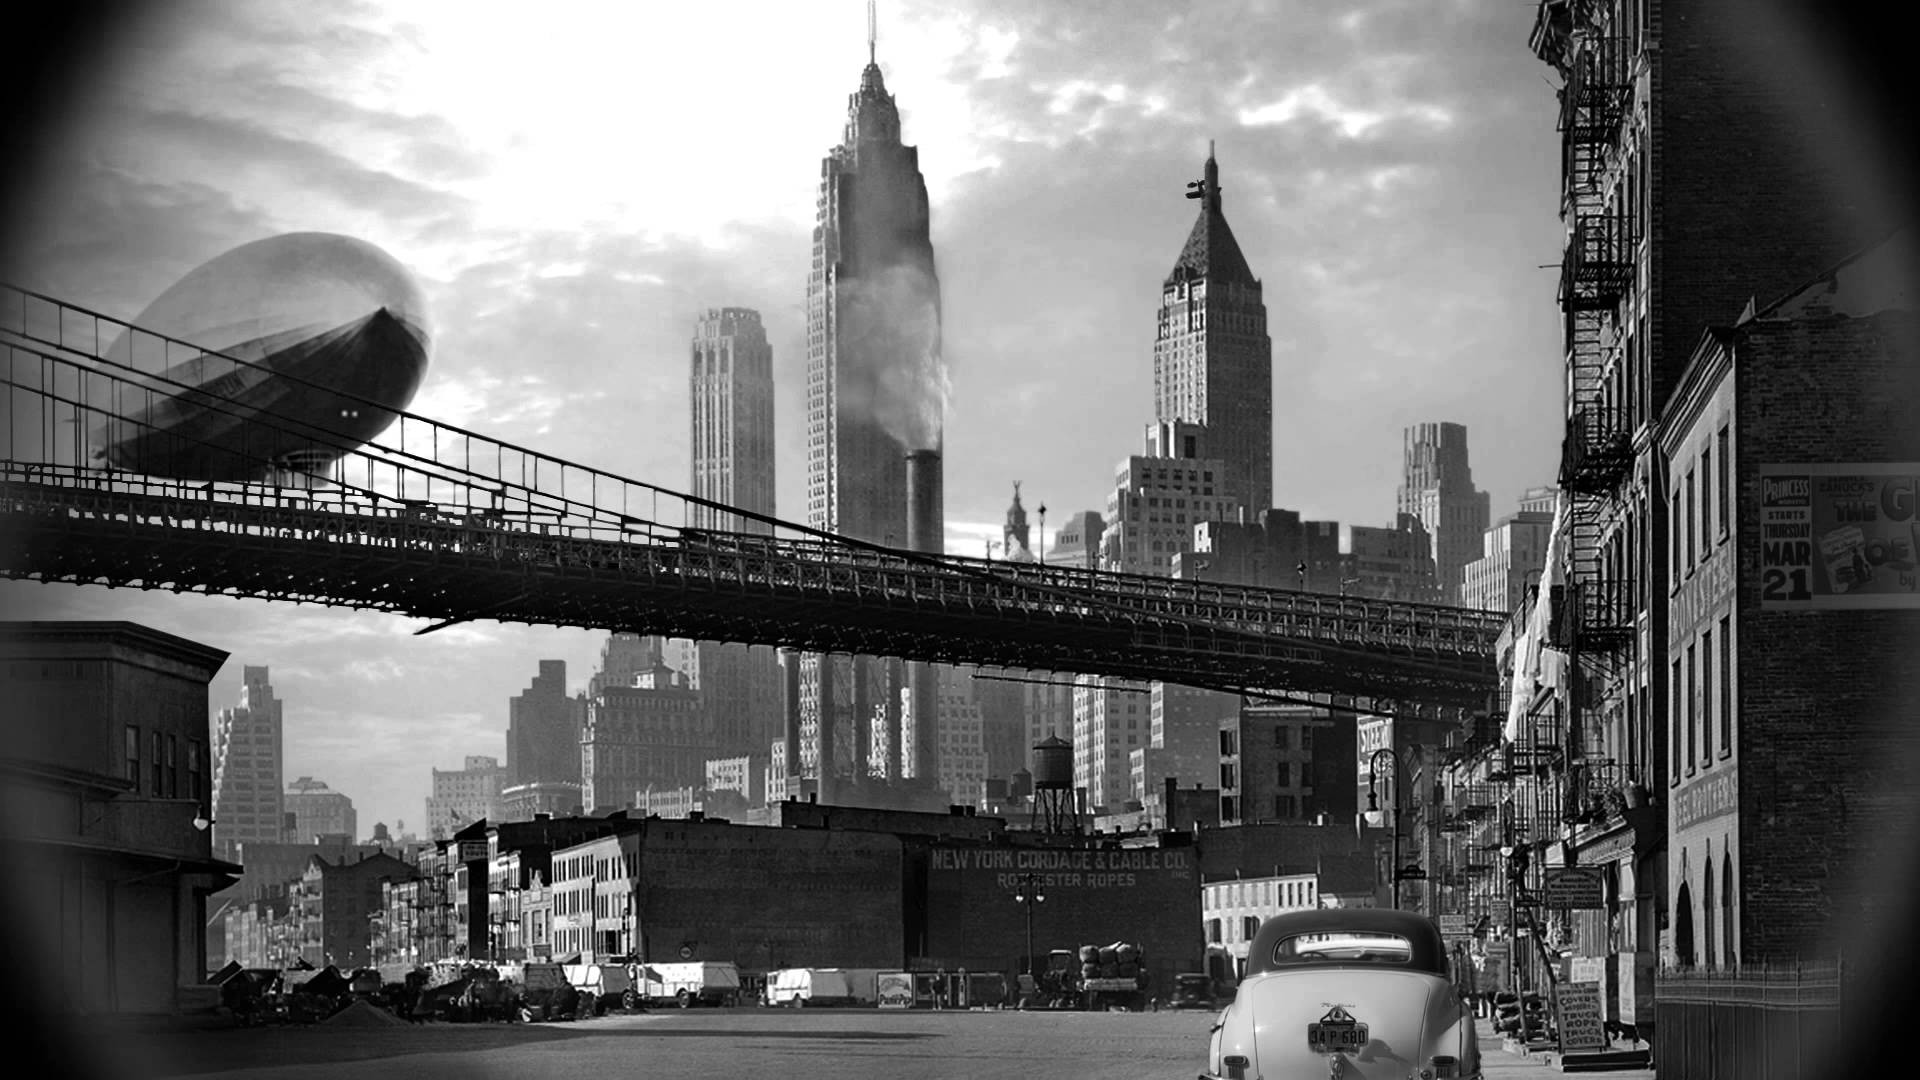 General 1920x1080 city monochrome cityscape airships New York City vintage bridge car USA